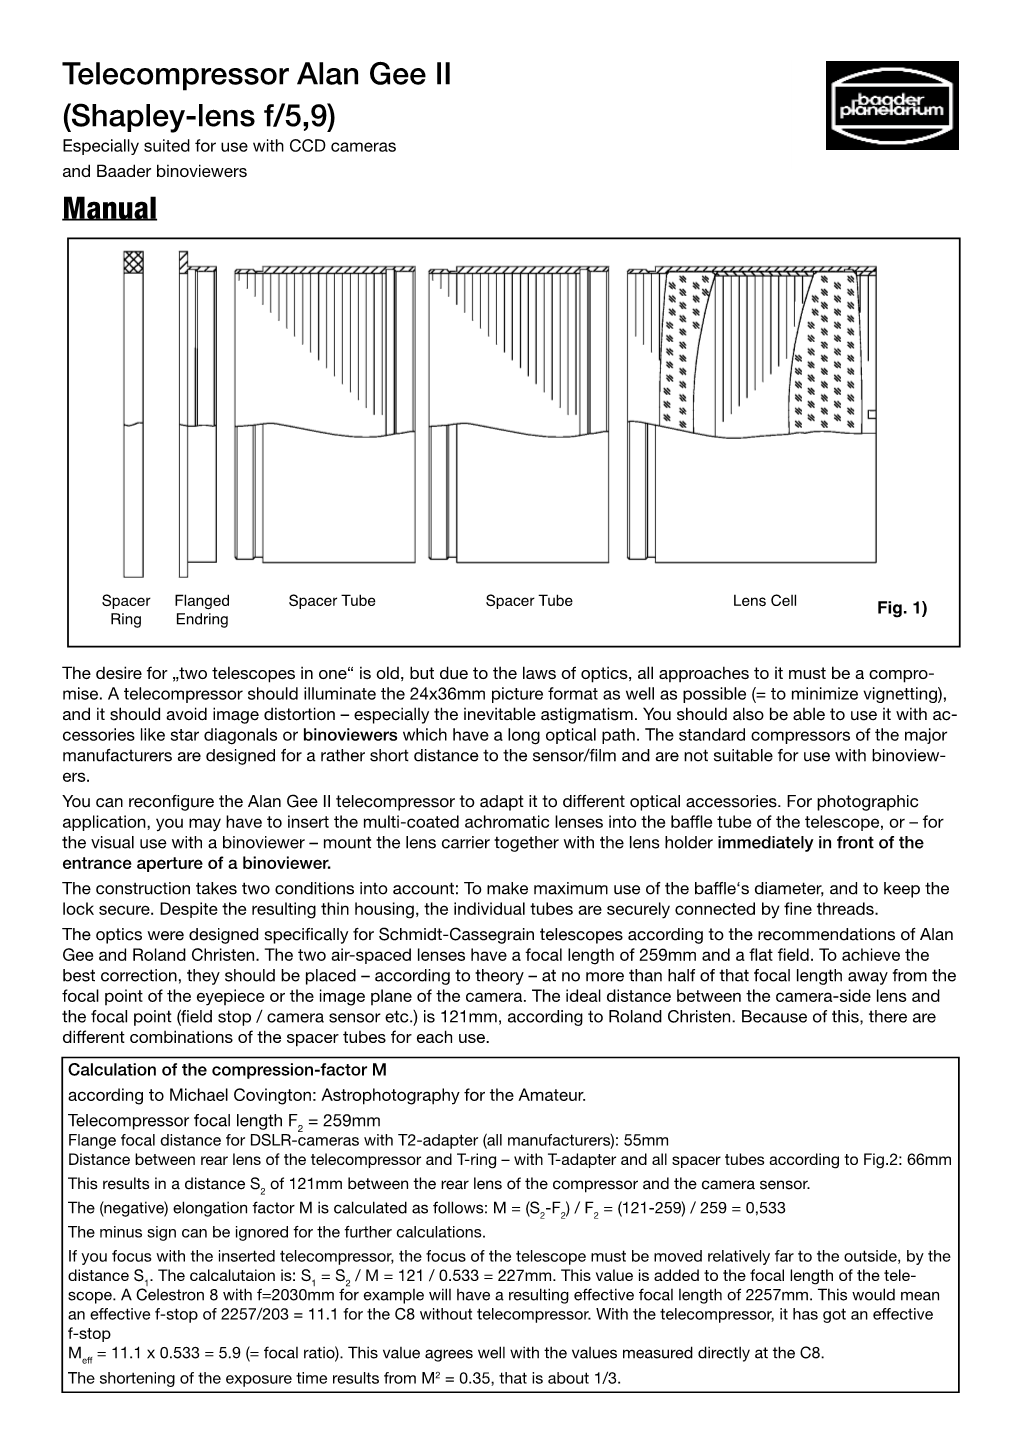 Telecompressor Alan Gee II (Shapley-Lens F/5,9) Manual